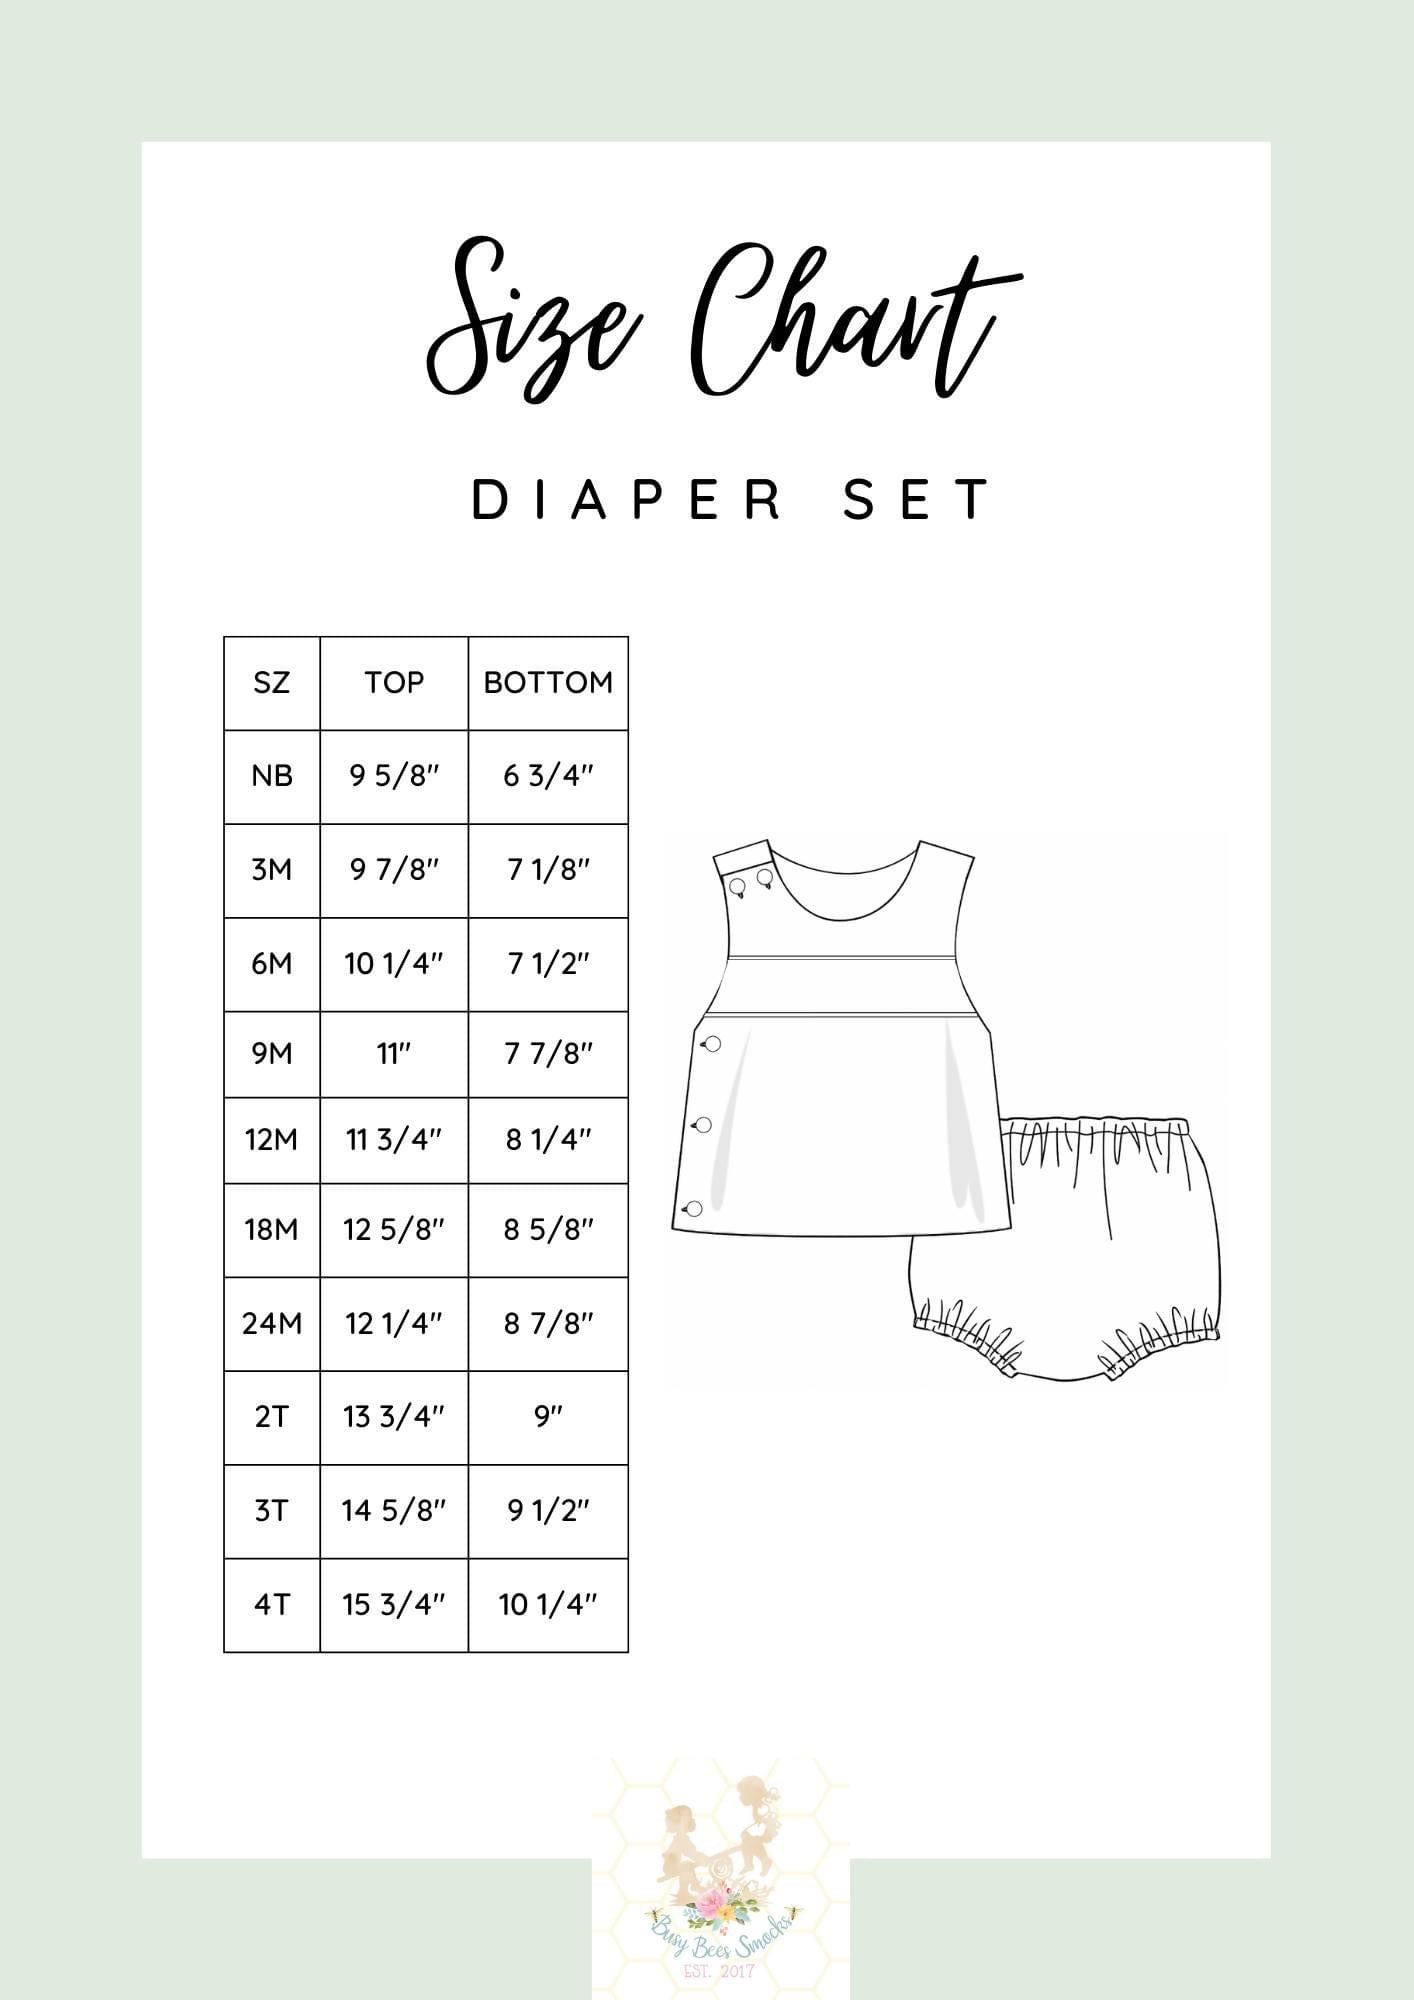 Diaper Set Size Chart